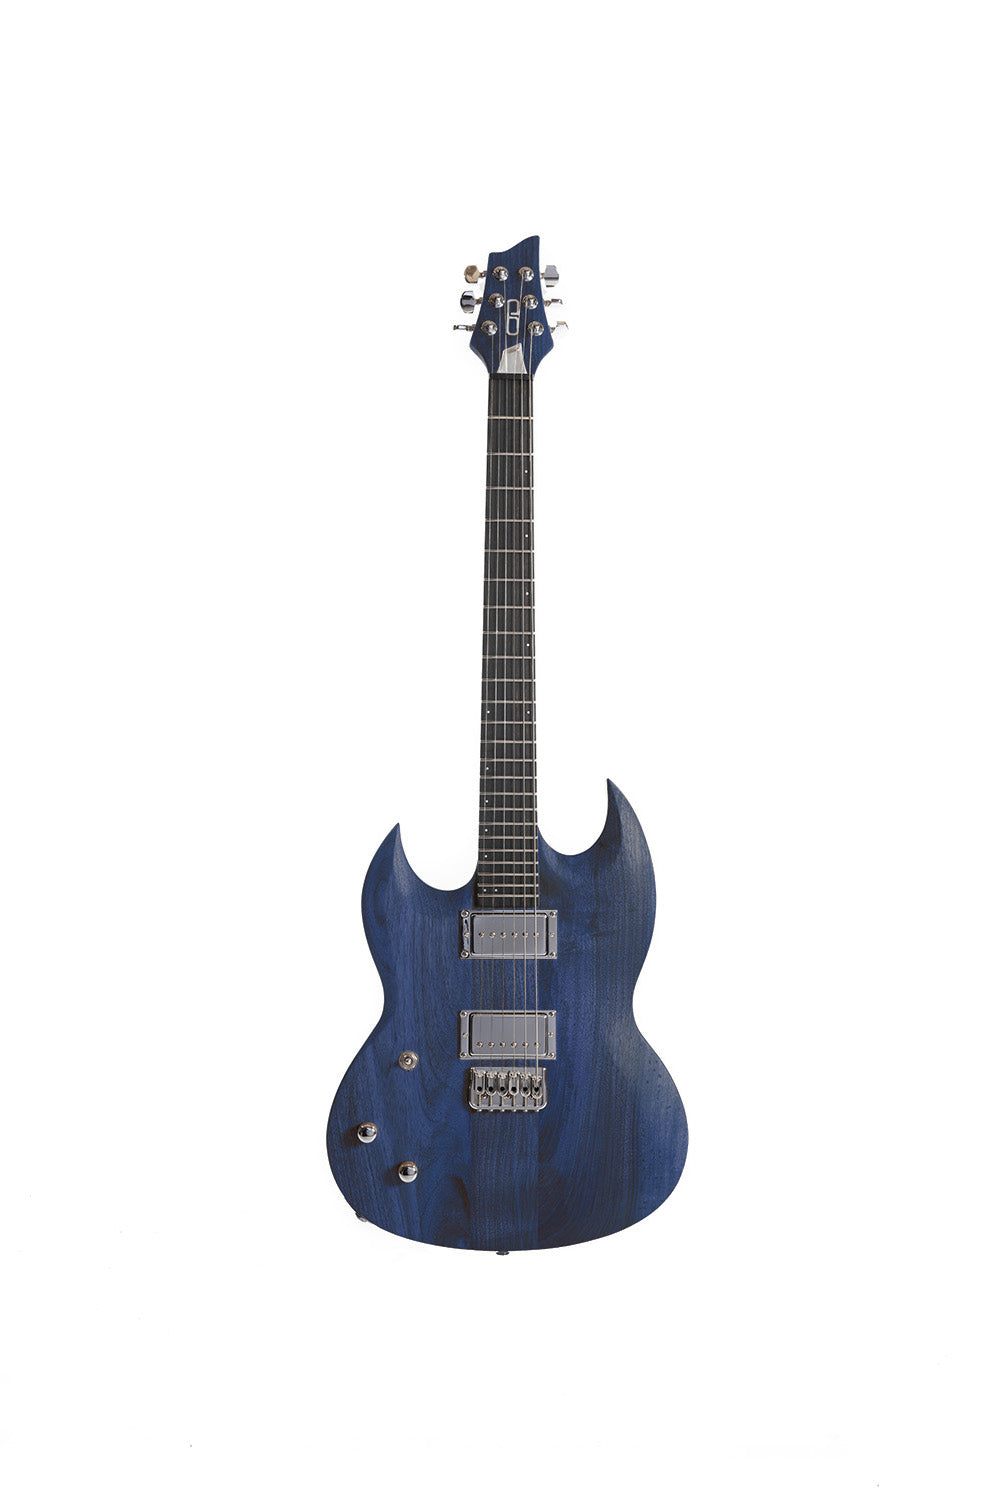 SY_Full_Walnut_Deep_Blue_Front_left_handed_De_Leeuw_Guitars_Paris_Made_in_France_Luthier_Guitar_Maker_France_Neck_Through_Manche_Traversant